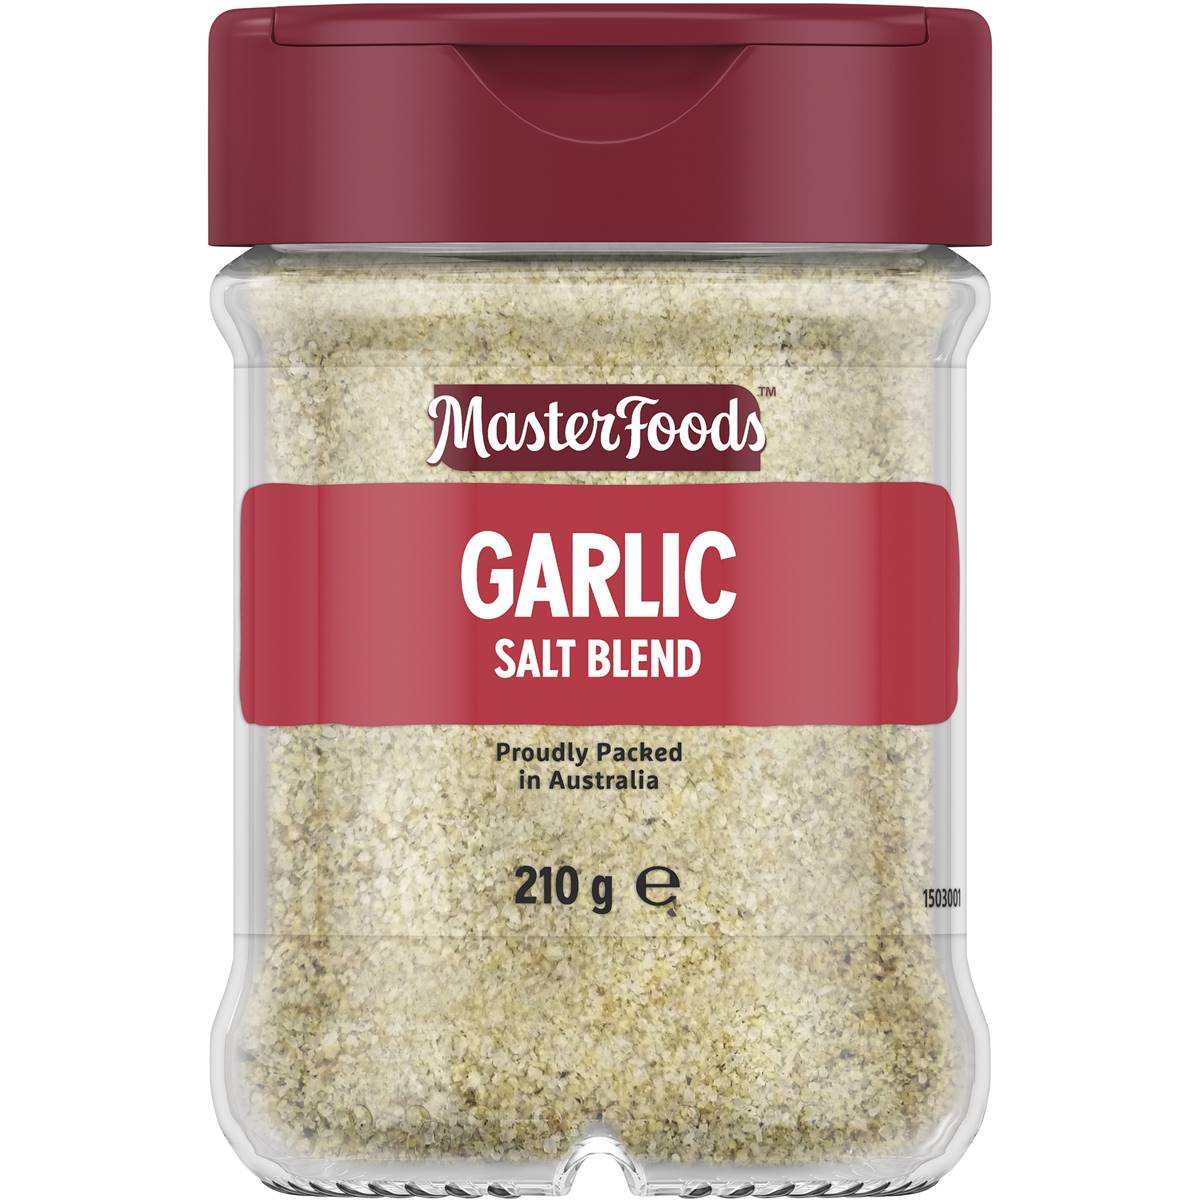 Masterfoods Garlic Salt 210g is halal suitable, vegan, vegetarian,  gluten-free